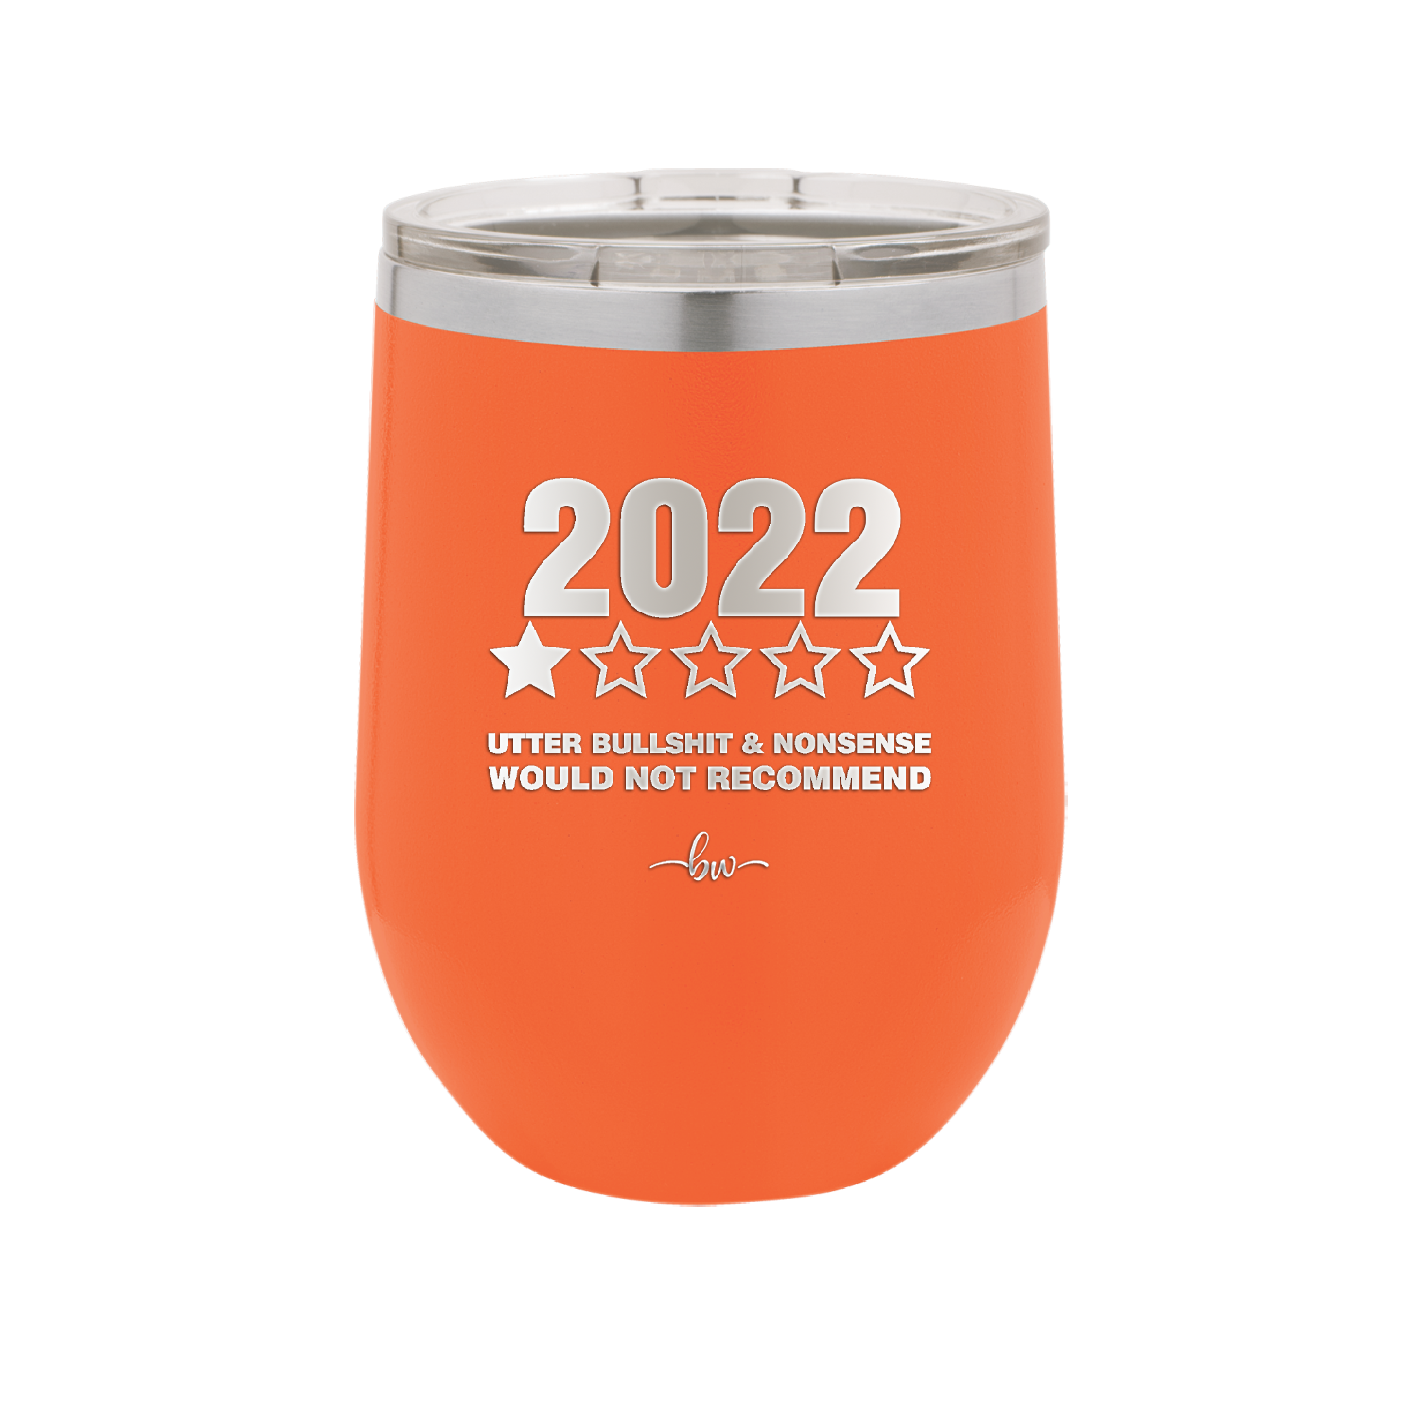 12 oz wine cup 2022 utter bullshitt and nonsense would not recommend - orange